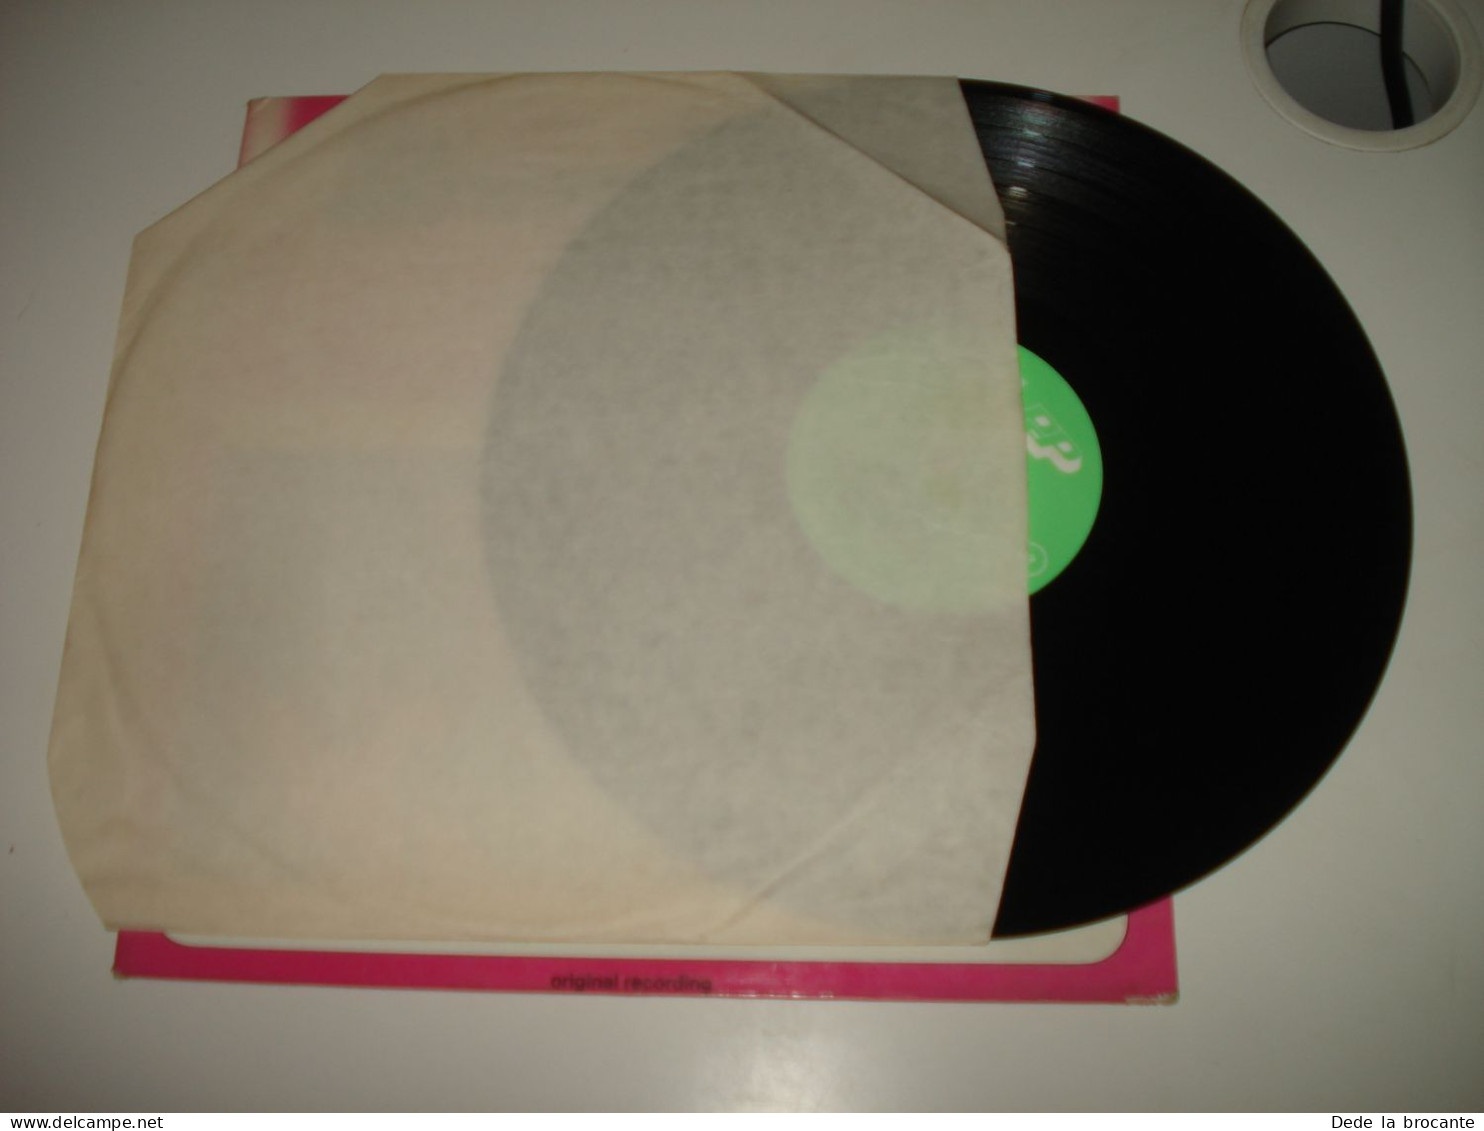 B8 / Brenda Lee – I'm Sorry - 1  LP  - 4M 032-97089 - Belgique  1975  M/EX - Country En Folk